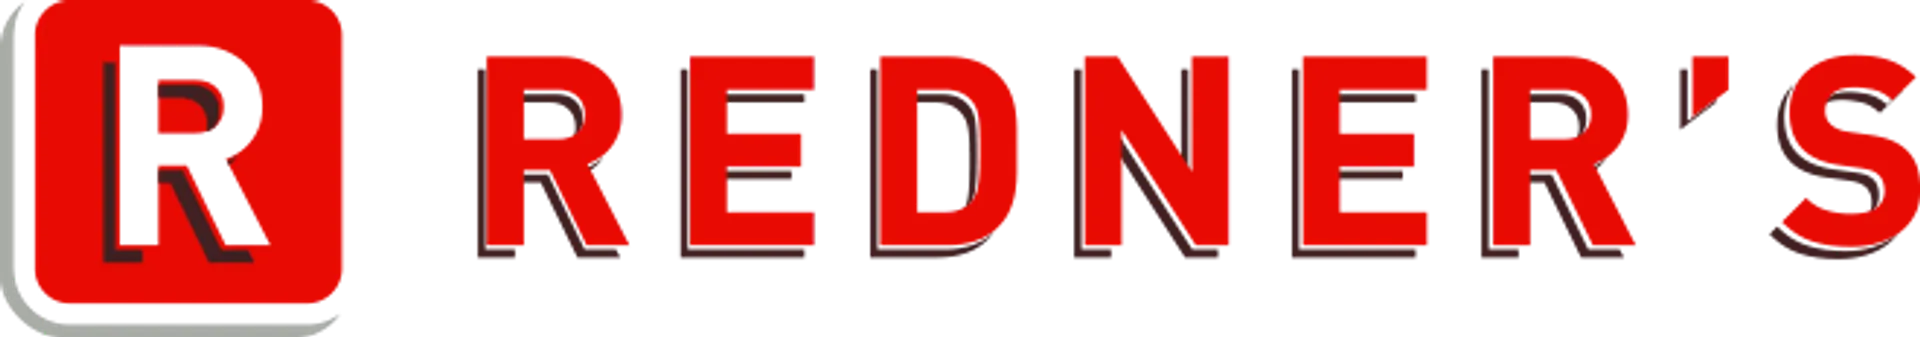 REDNER’S MARKET logo. Current weekly ad